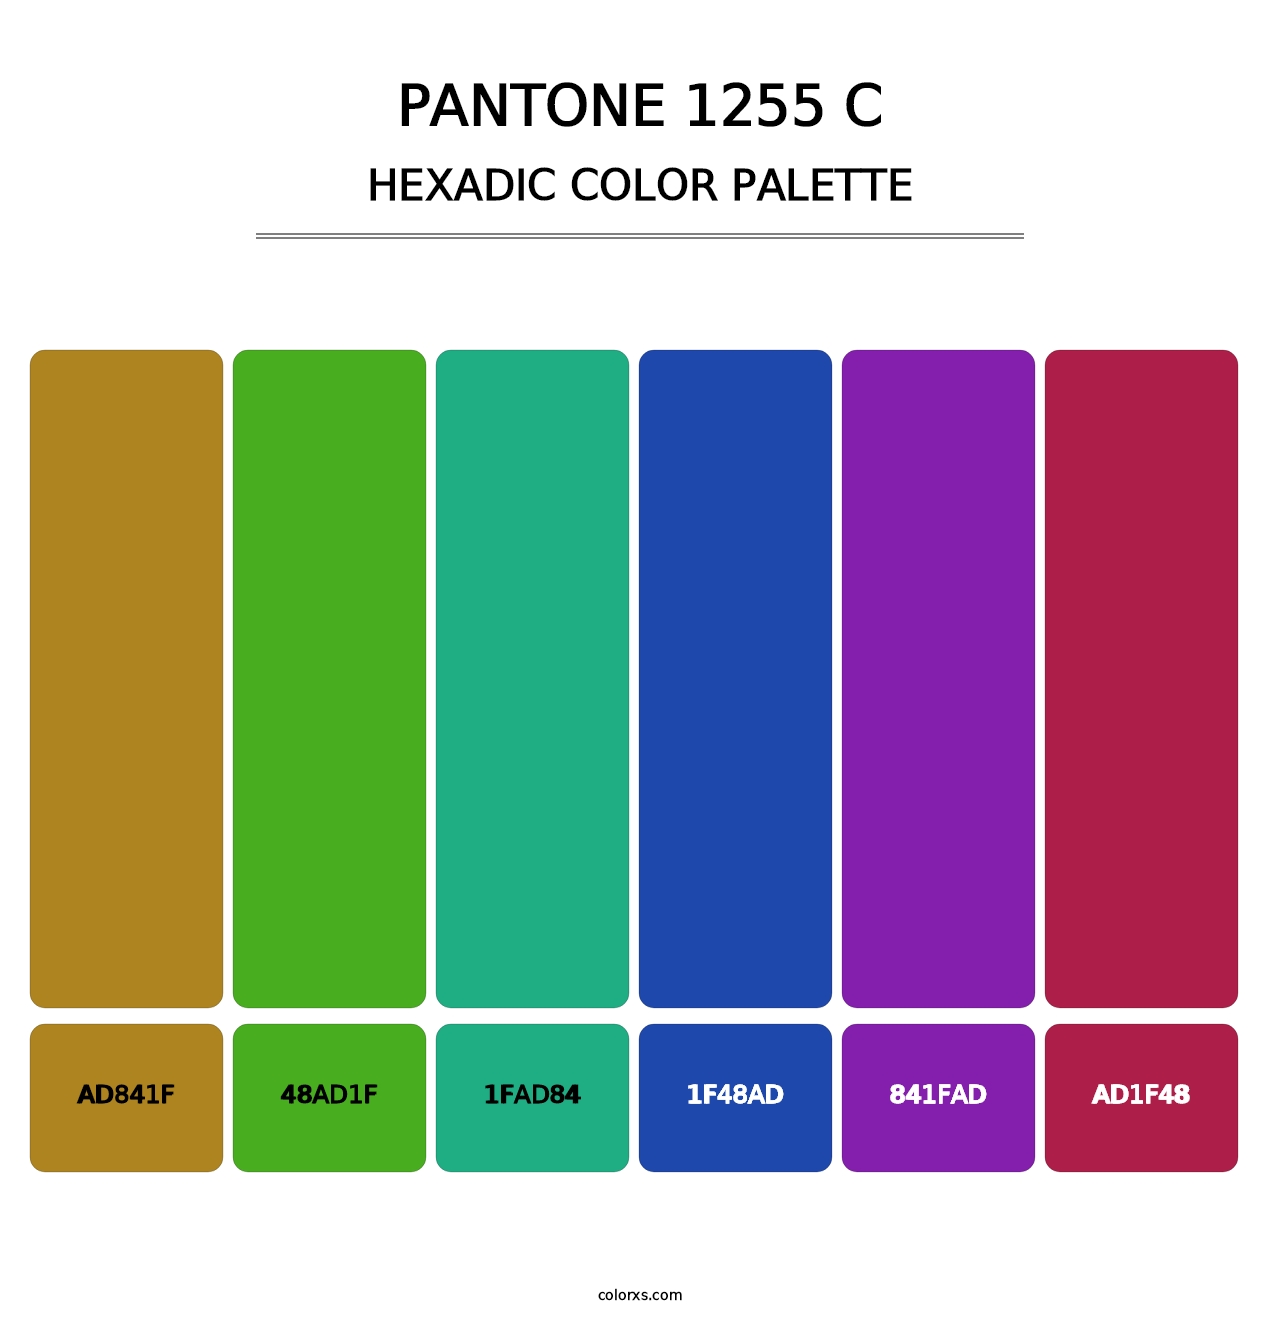 PANTONE 1255 C - Hexadic Color Palette